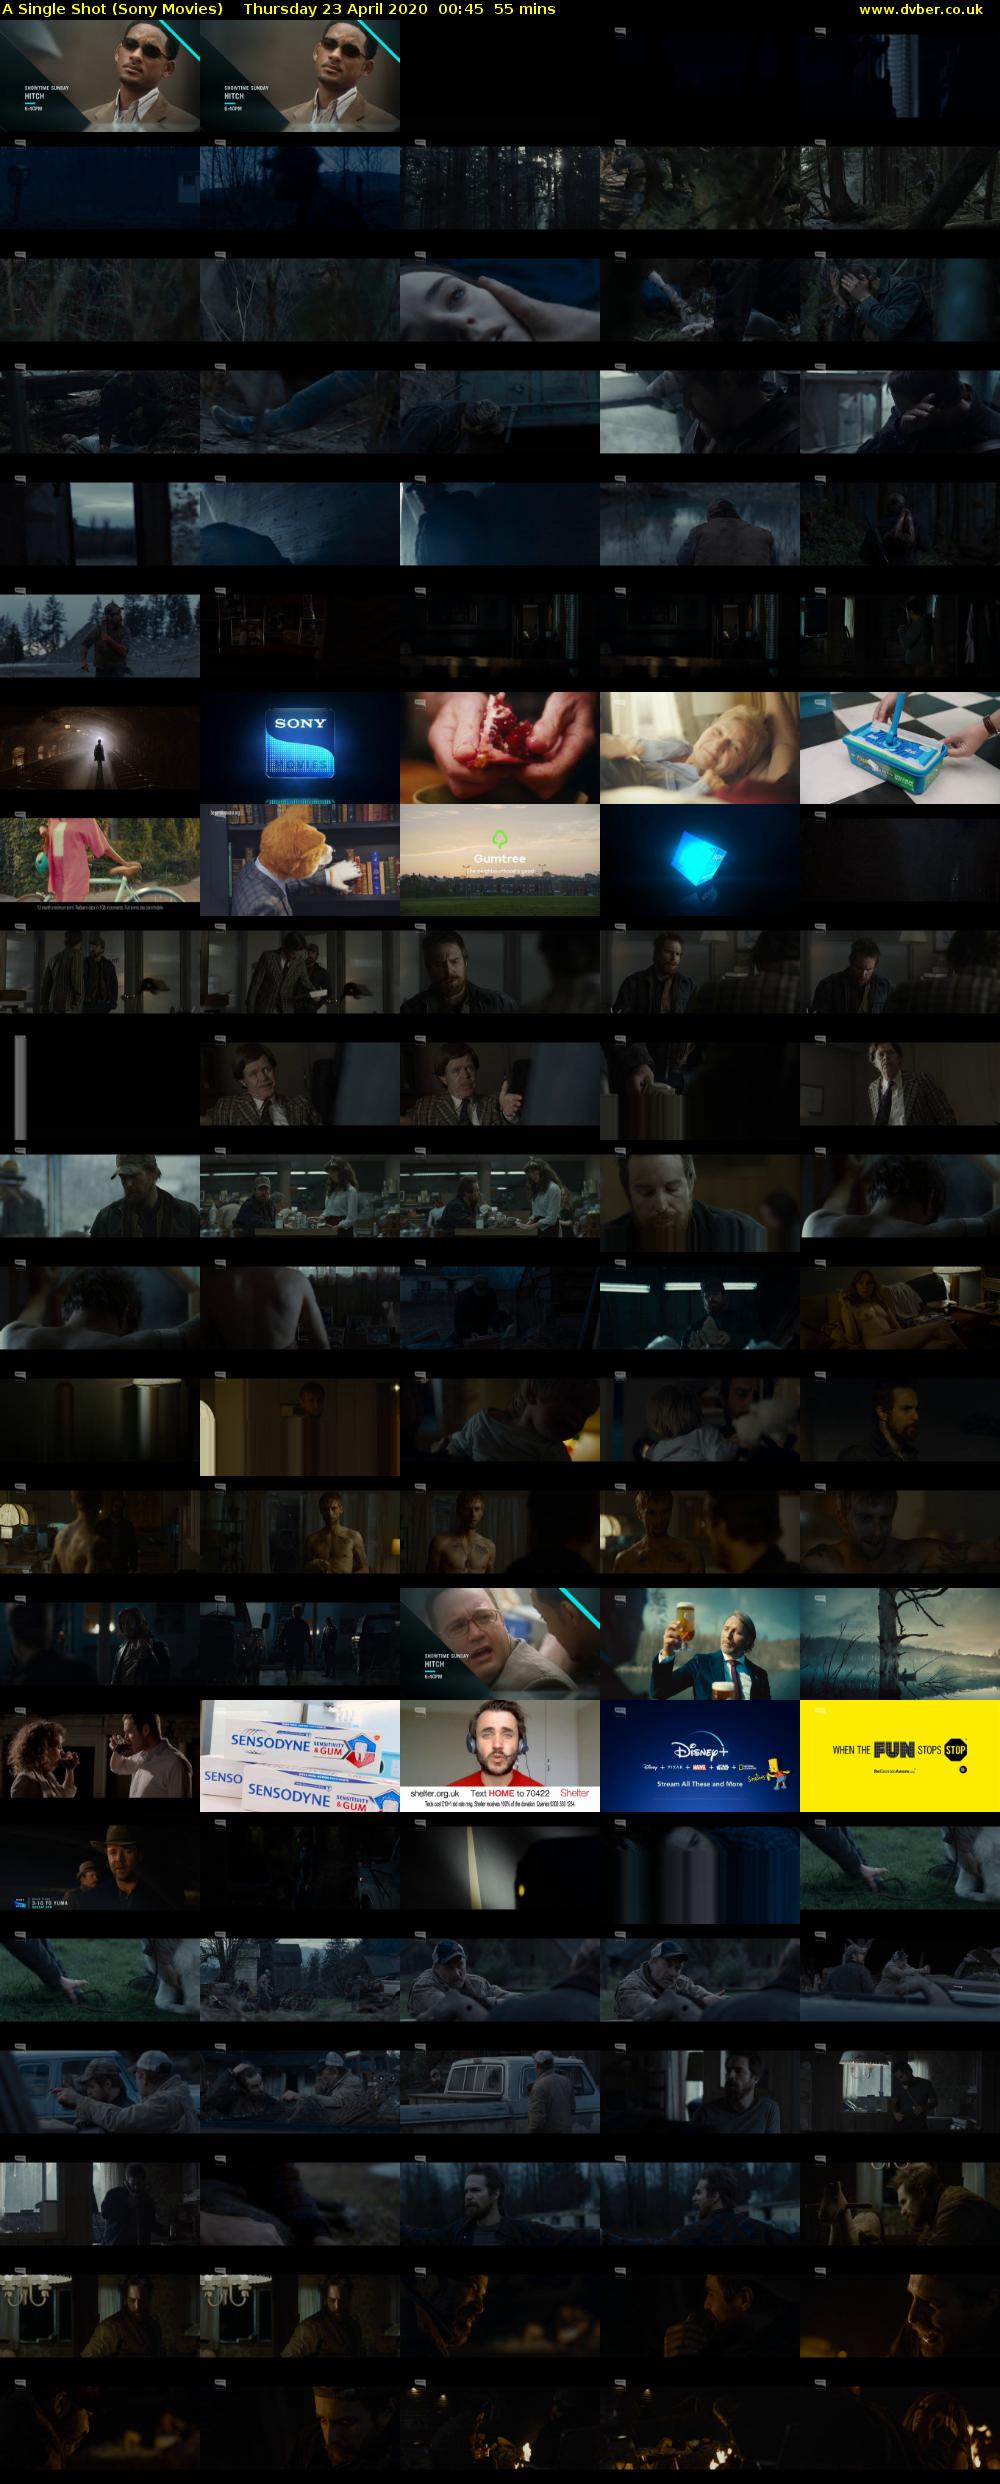 A Single Shot (Sony Movies) Thursday 23 April 2020 00:45 - 01:40